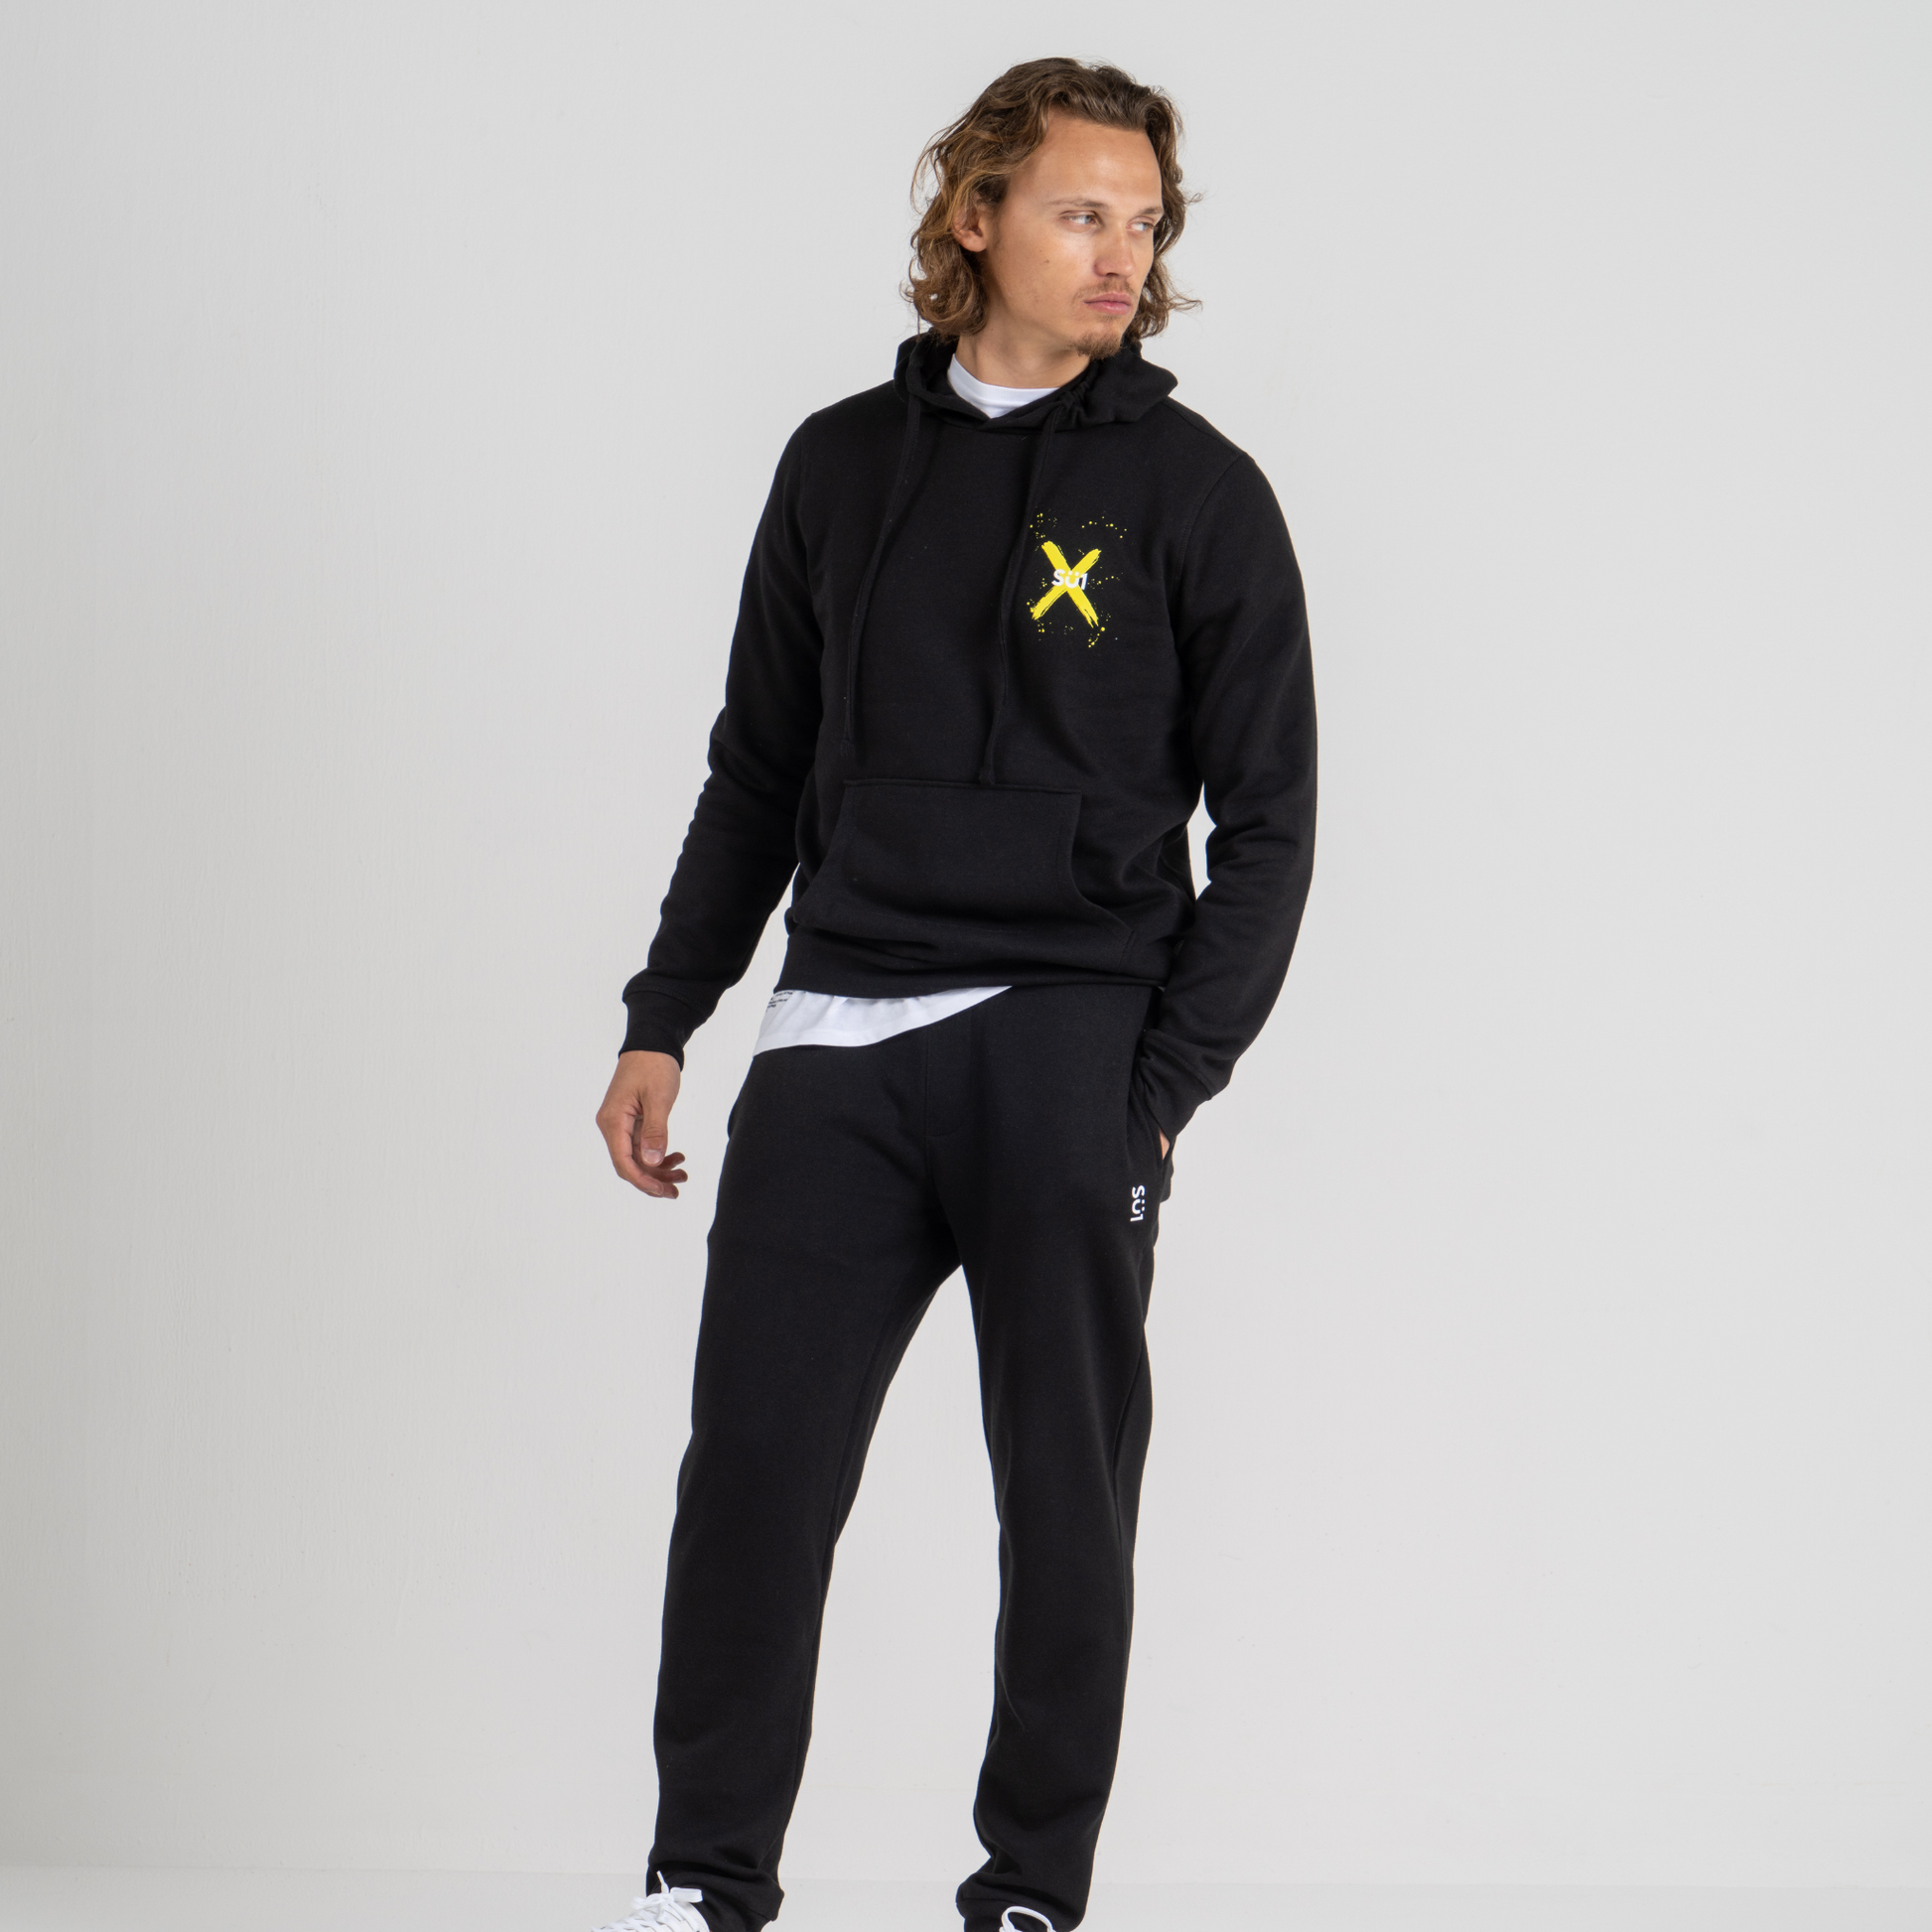 Man wearing black hoodie SU1 clothing brand and black sport trousers